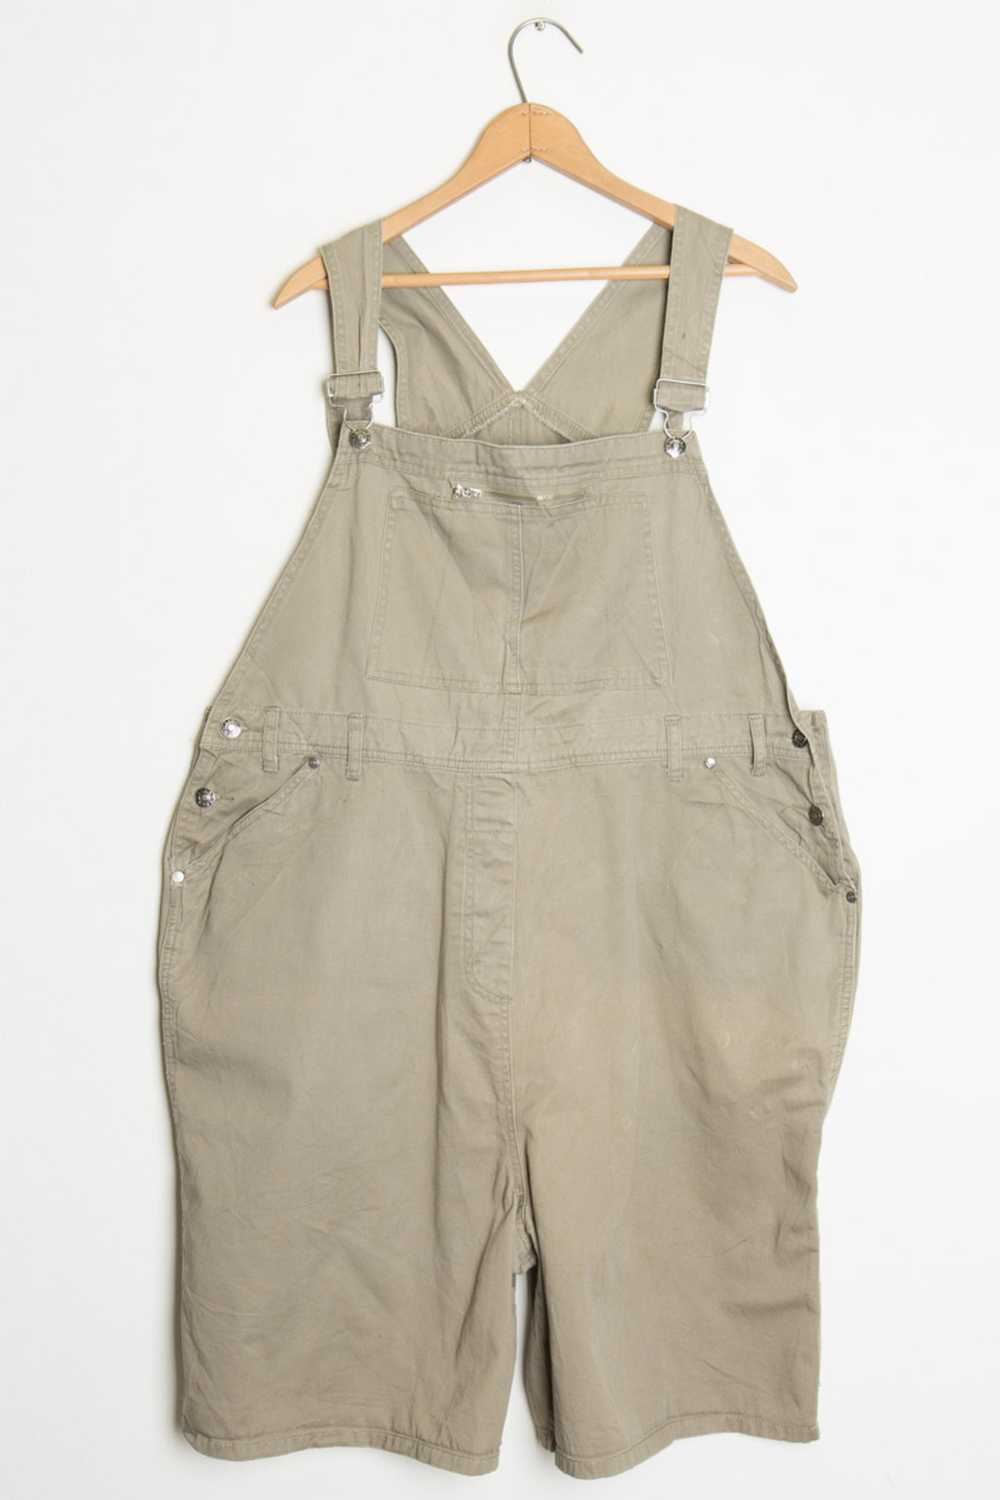 Vintage Denim Overall Shorts 68 - image 2